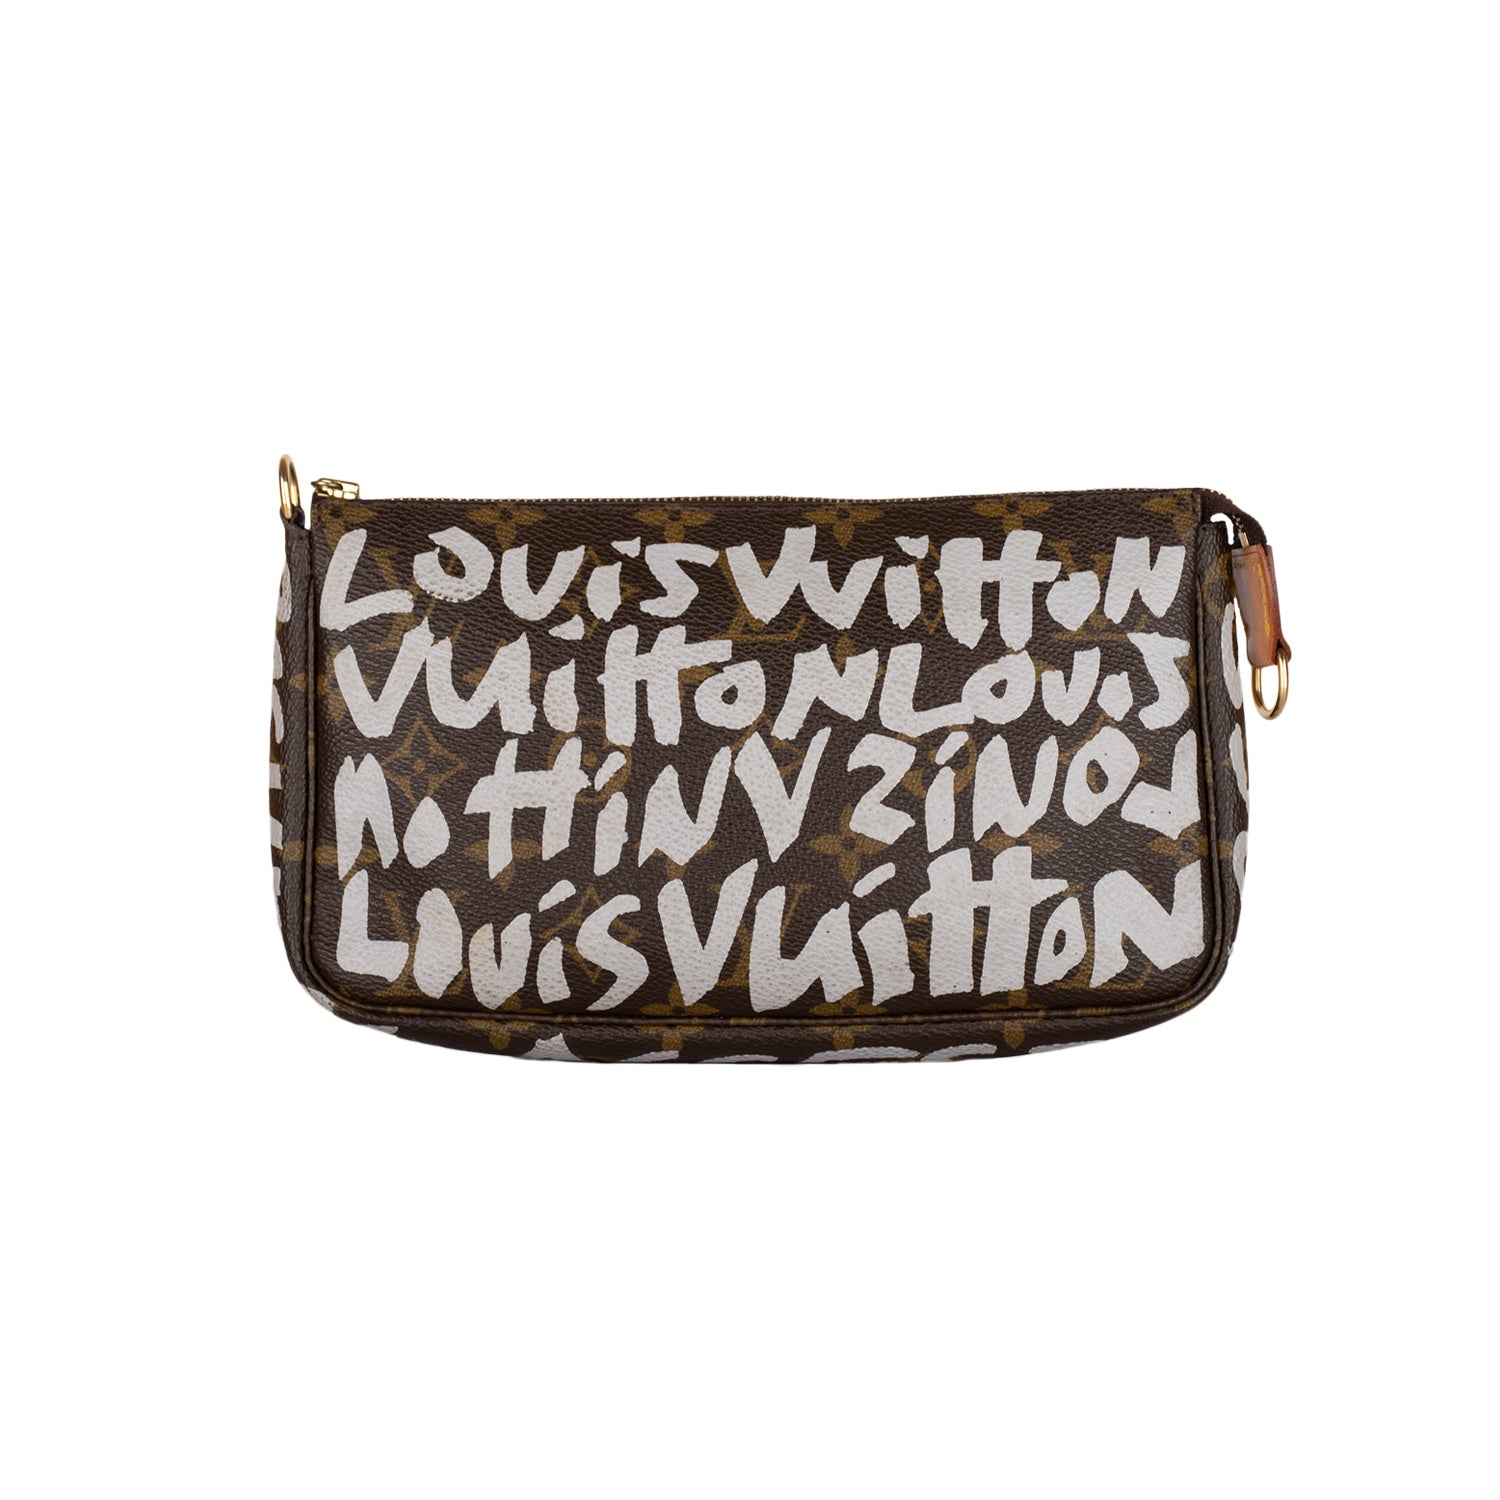 Louis Vuitton Monogram Stephen Sprouse Graffiti Pochette – The Hosta